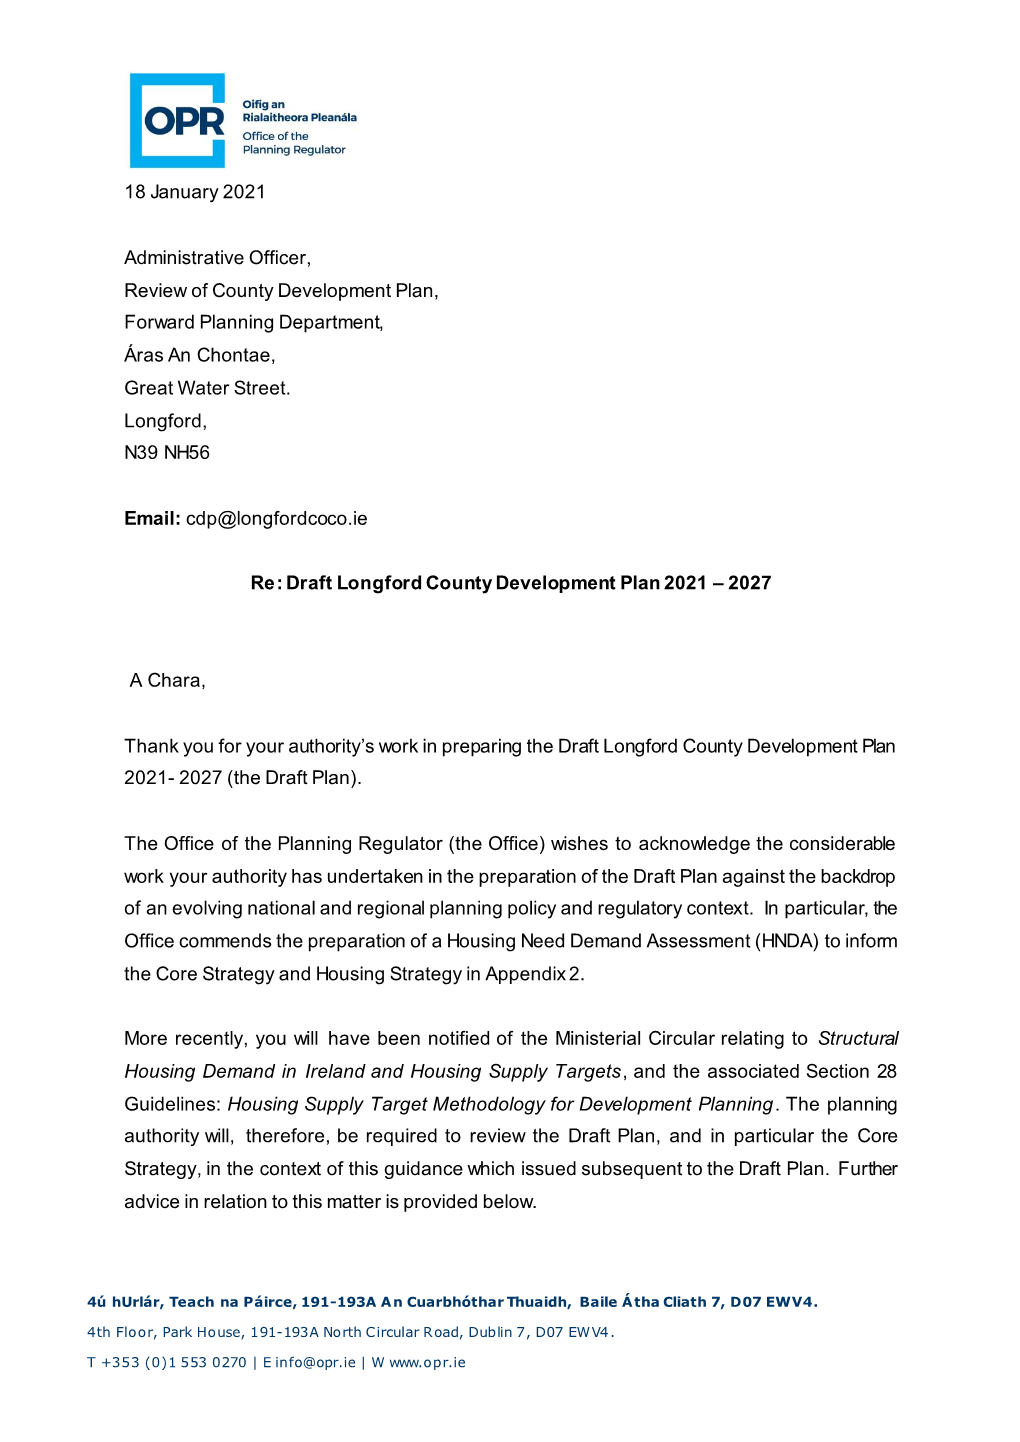 Draft Longford County Development Plan 2021-2027